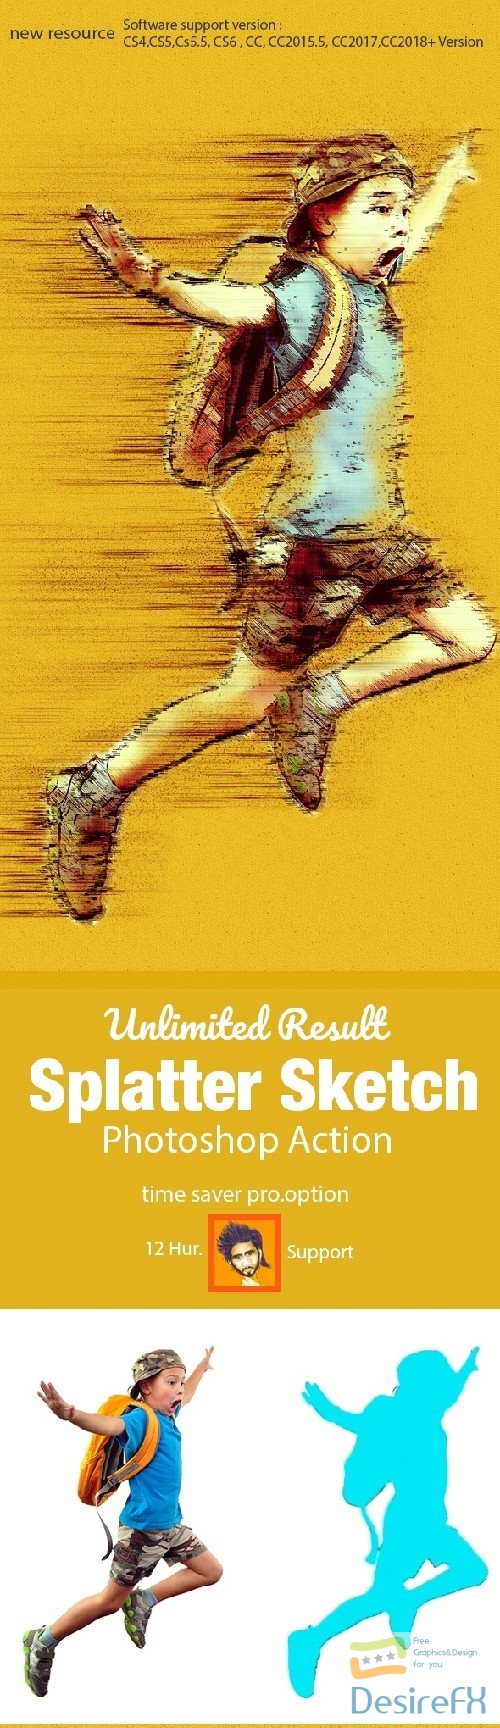 Splatter Sketch Photoshop Action 22285398